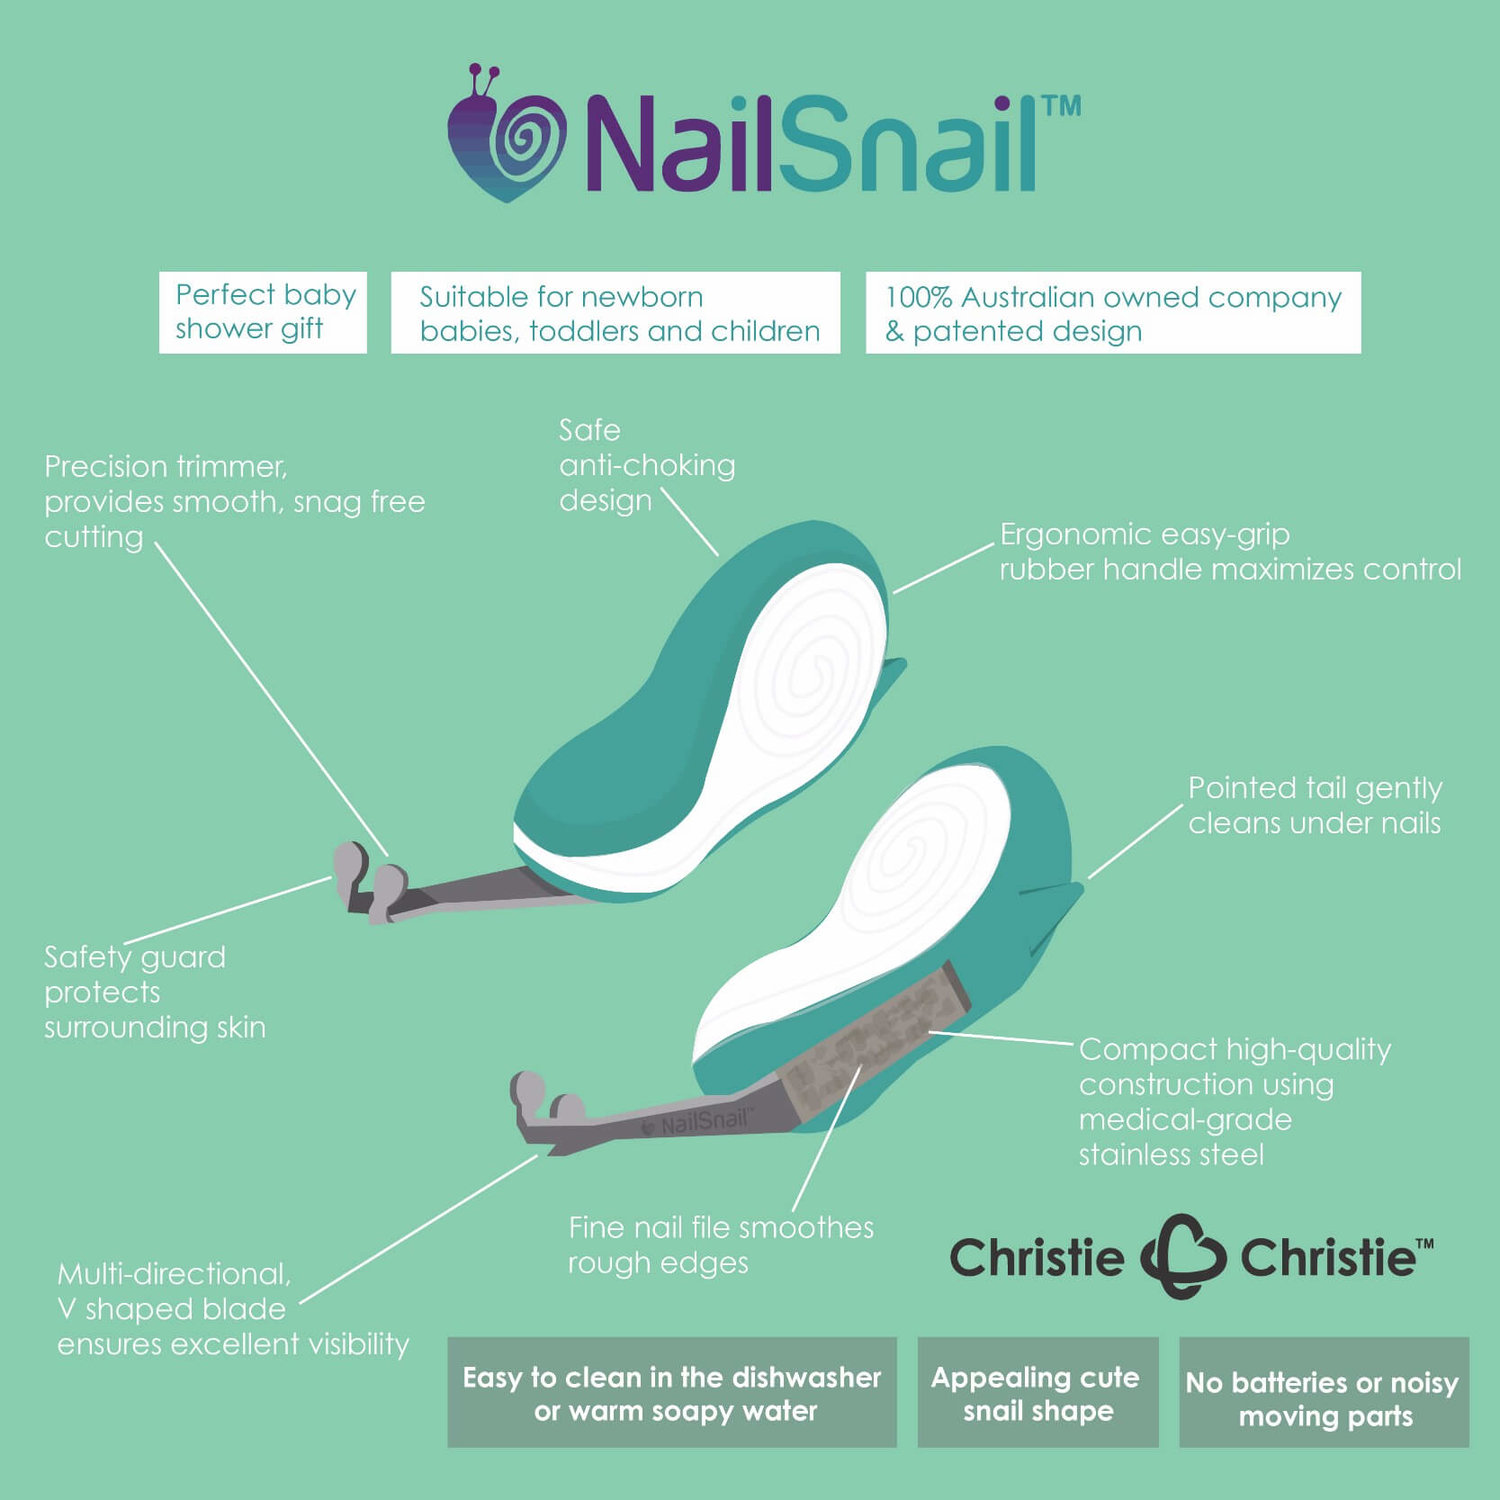 nail-snail-features-1-.jpg